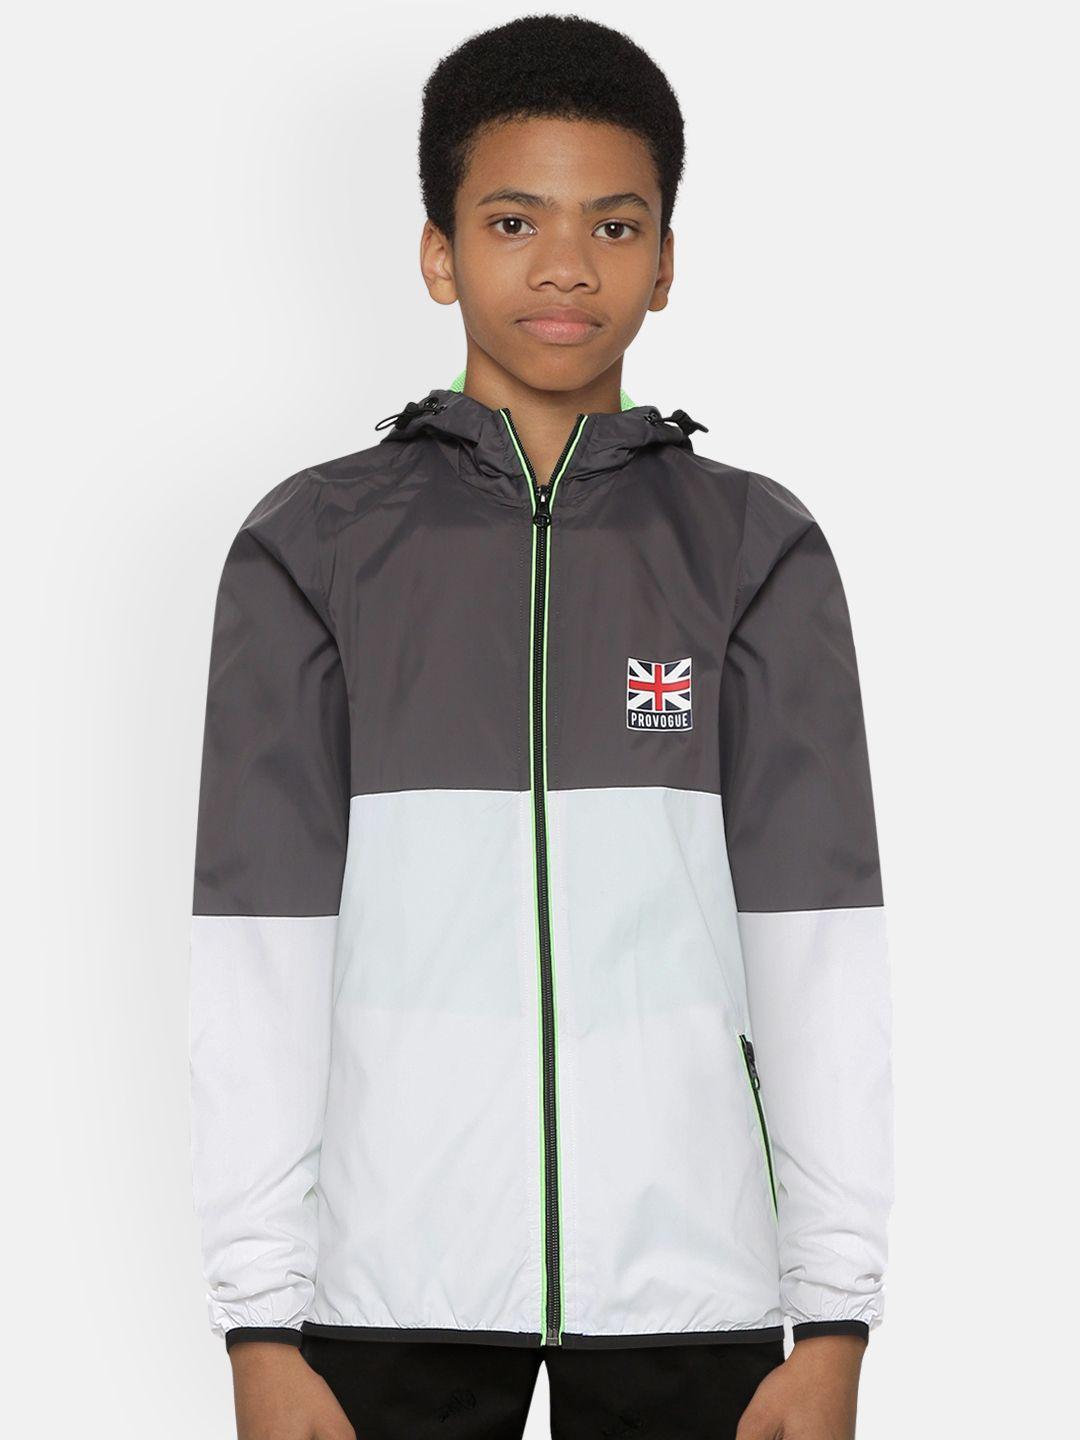 provogue boys white & charcoal grey colourblocked hooded sporty jacket